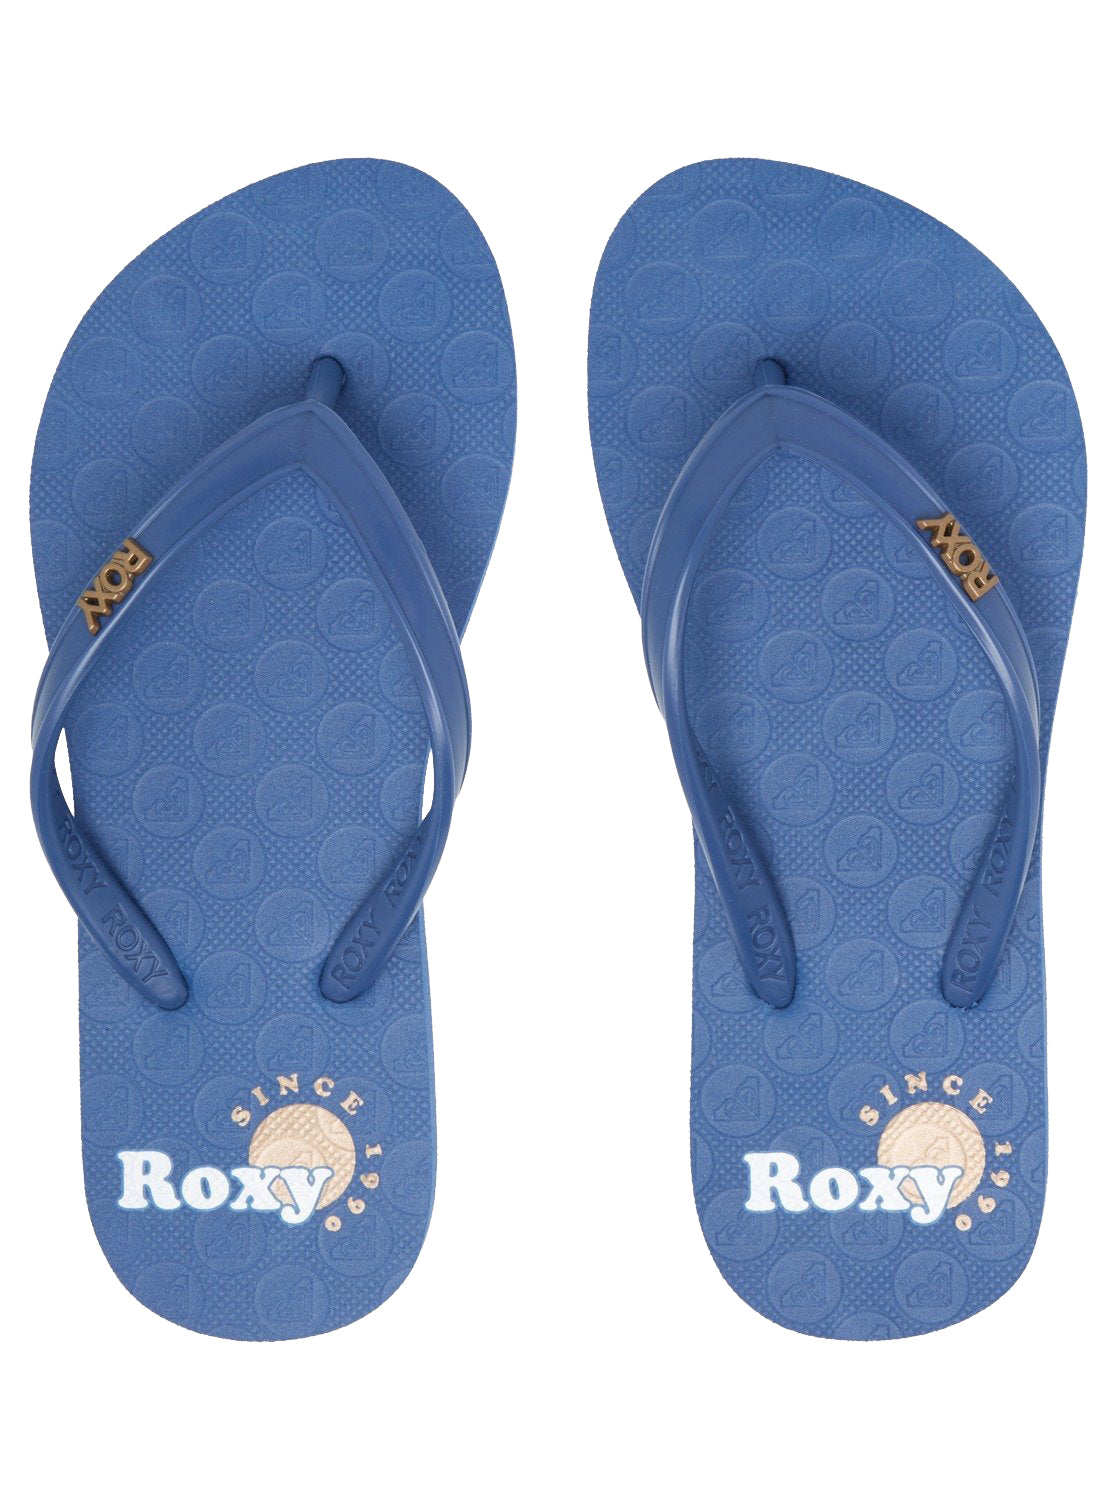 Roxy Viva Stamp 2 Girls Sandal BJL-Baja Blue 12 C